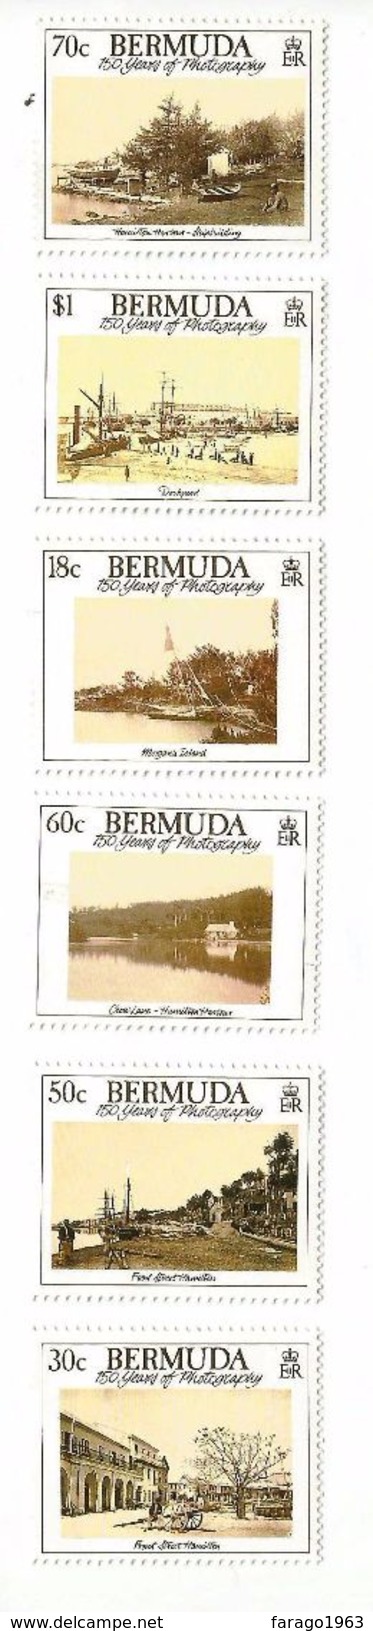 1989 Bermuda Photography Complete Set Of 6  MNH - Bermuda